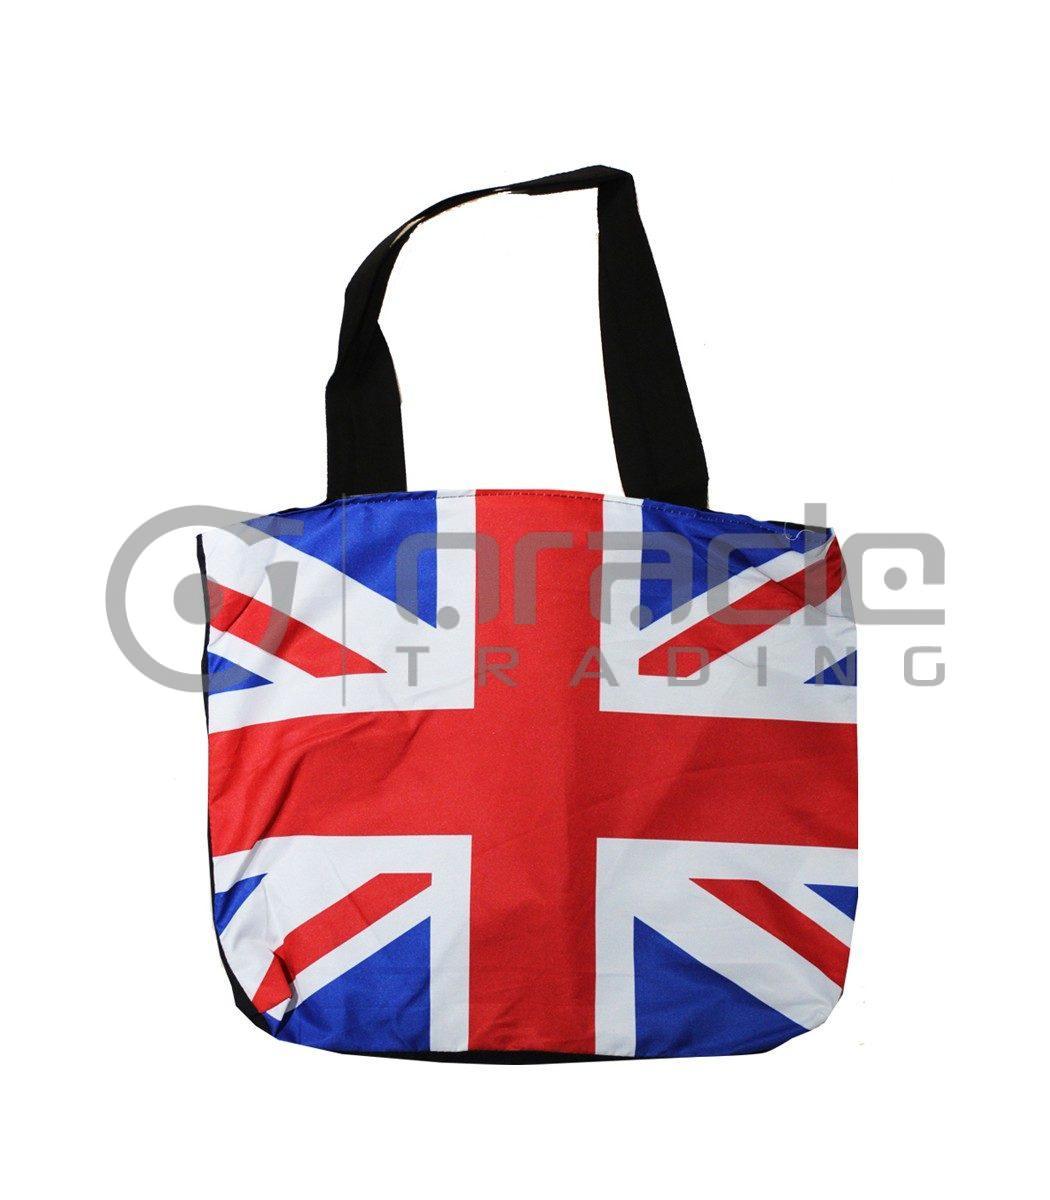 United Kingdom Tote Bag (UK)